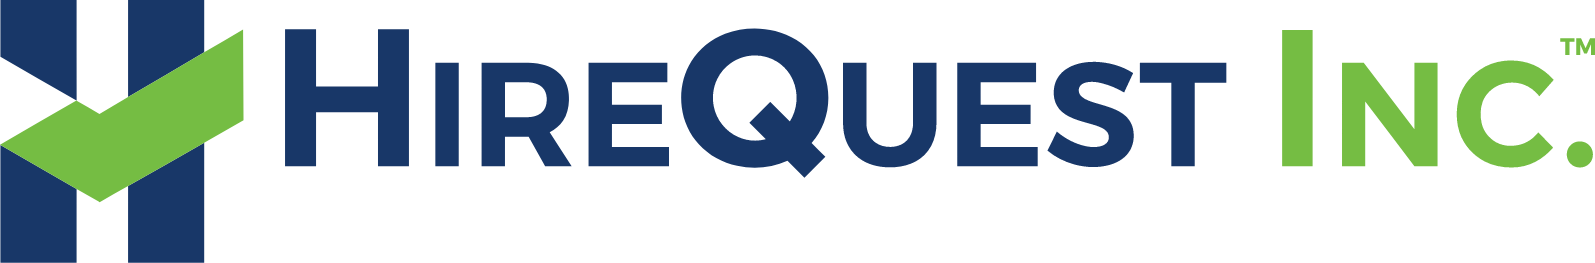 HireQuest logo large (transparent PNG)